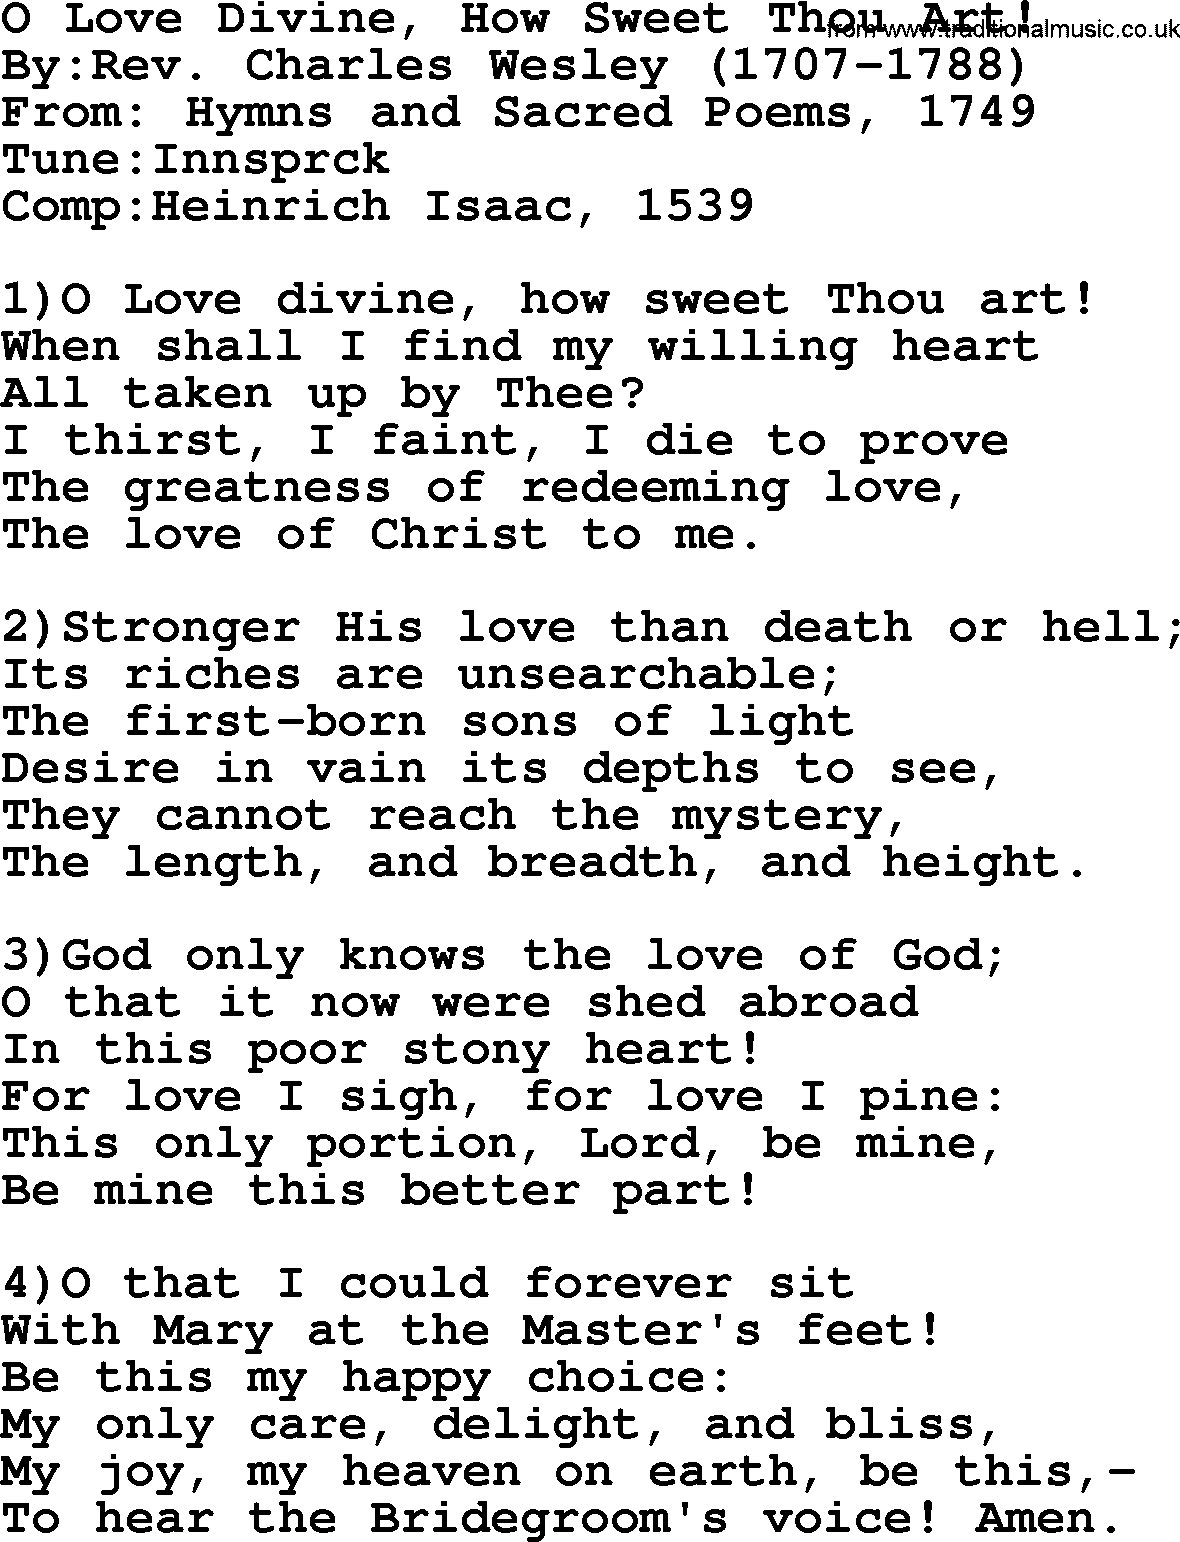 Methodist Hymn: O Love Divine, How Sweet Thou Art!, lyrics